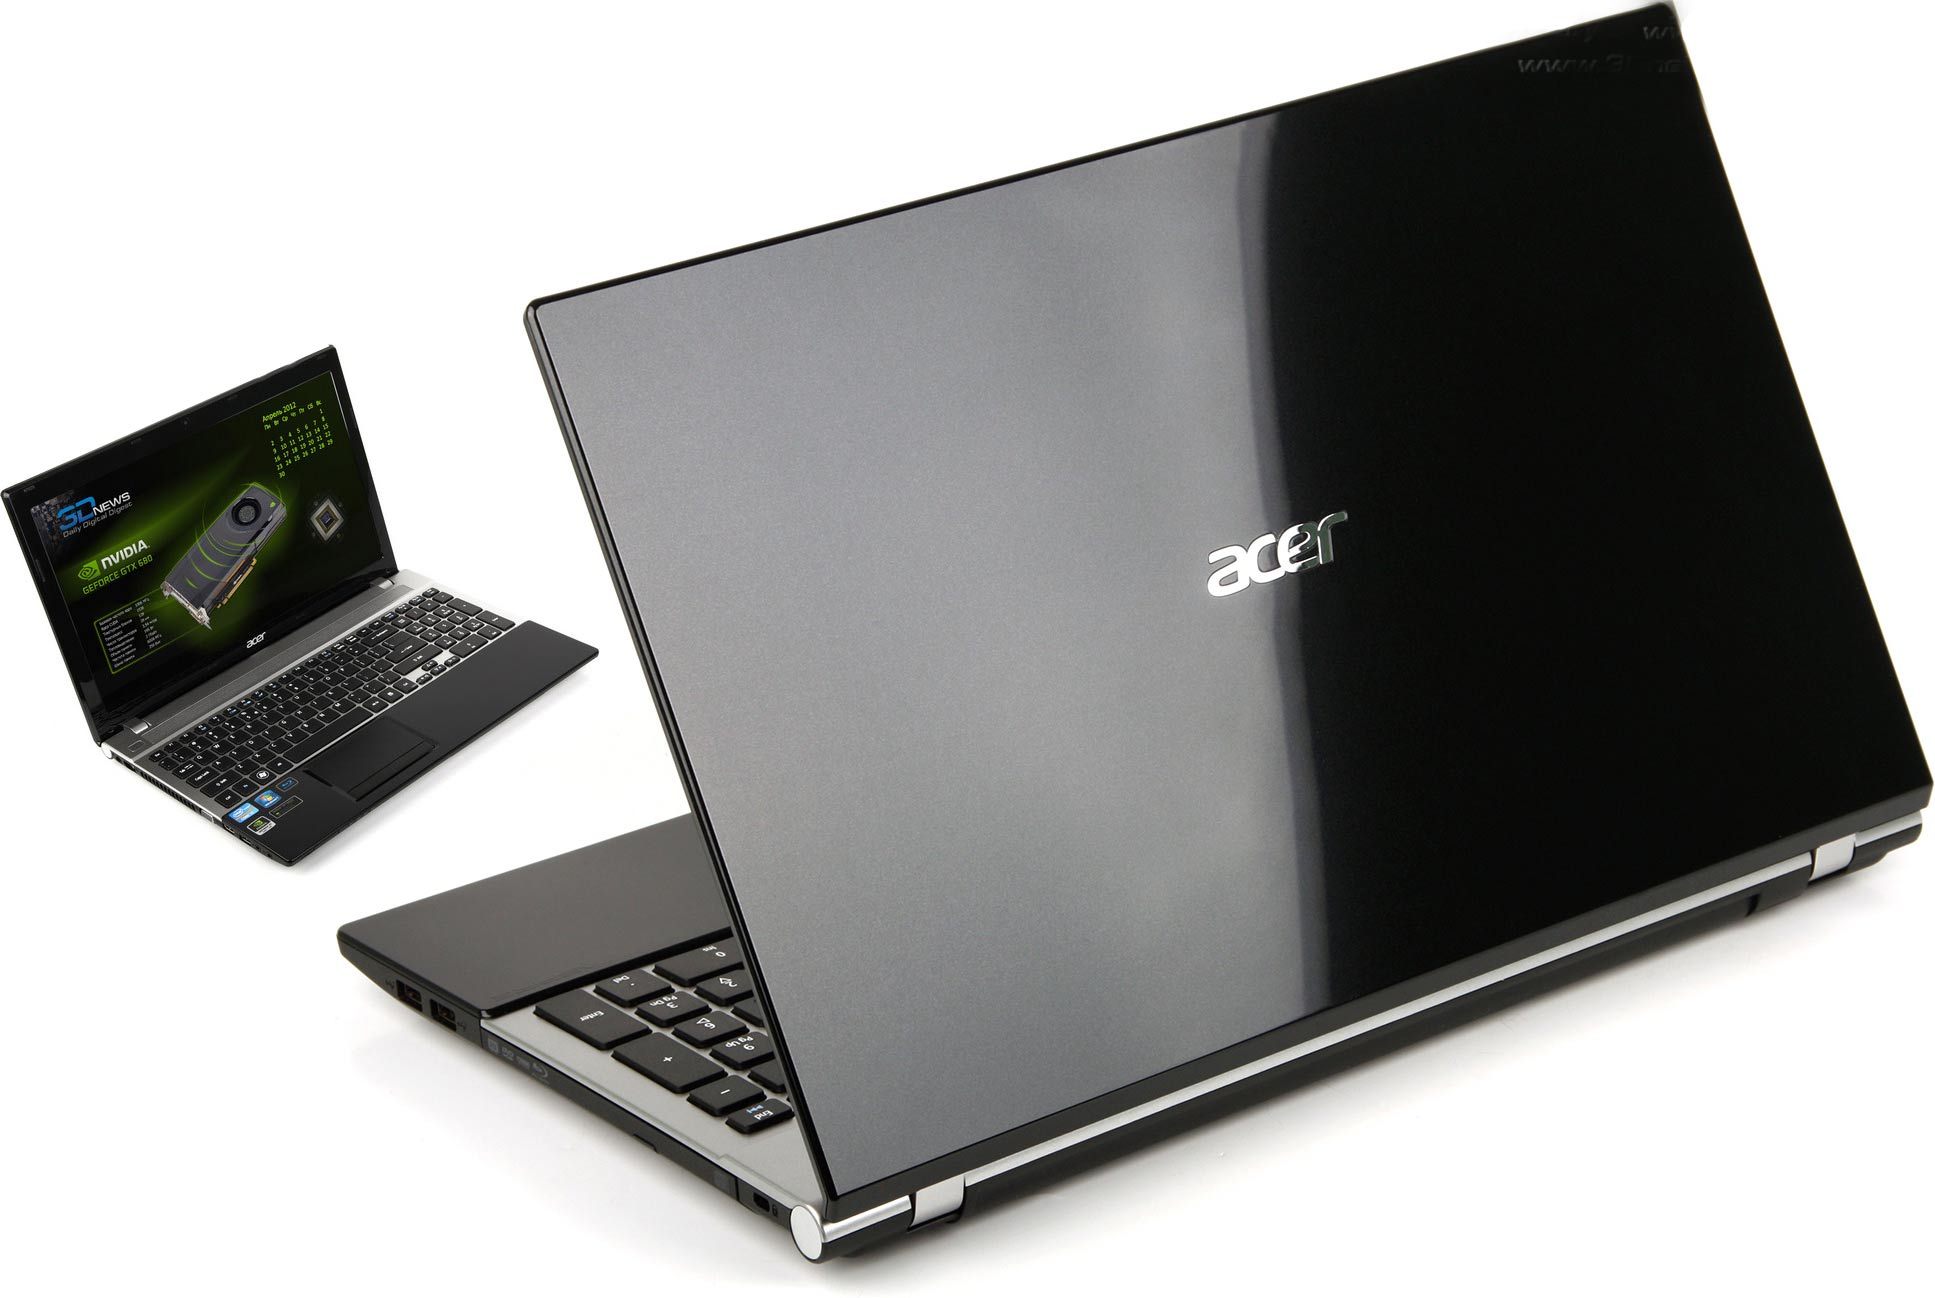 Laptop Acer, nhieu cau hinh cao thap, Clear kho, Gia le bang gia si, nhanh tay c